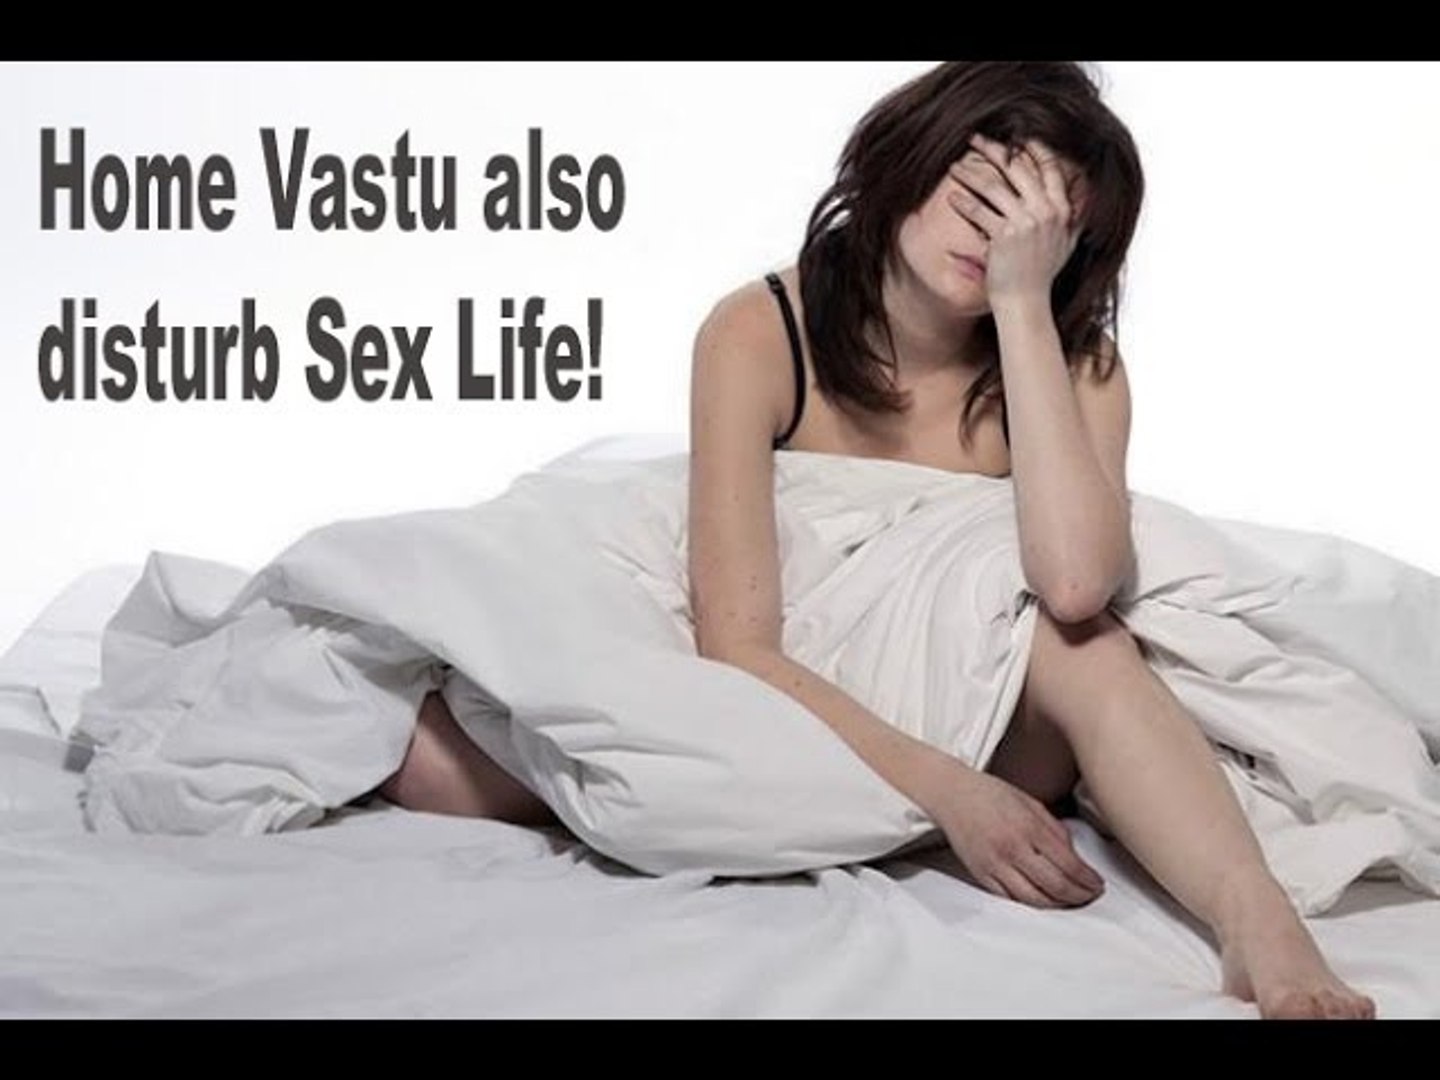 Home Vastu also disturb Sex Life - Research! - video Dailymotion